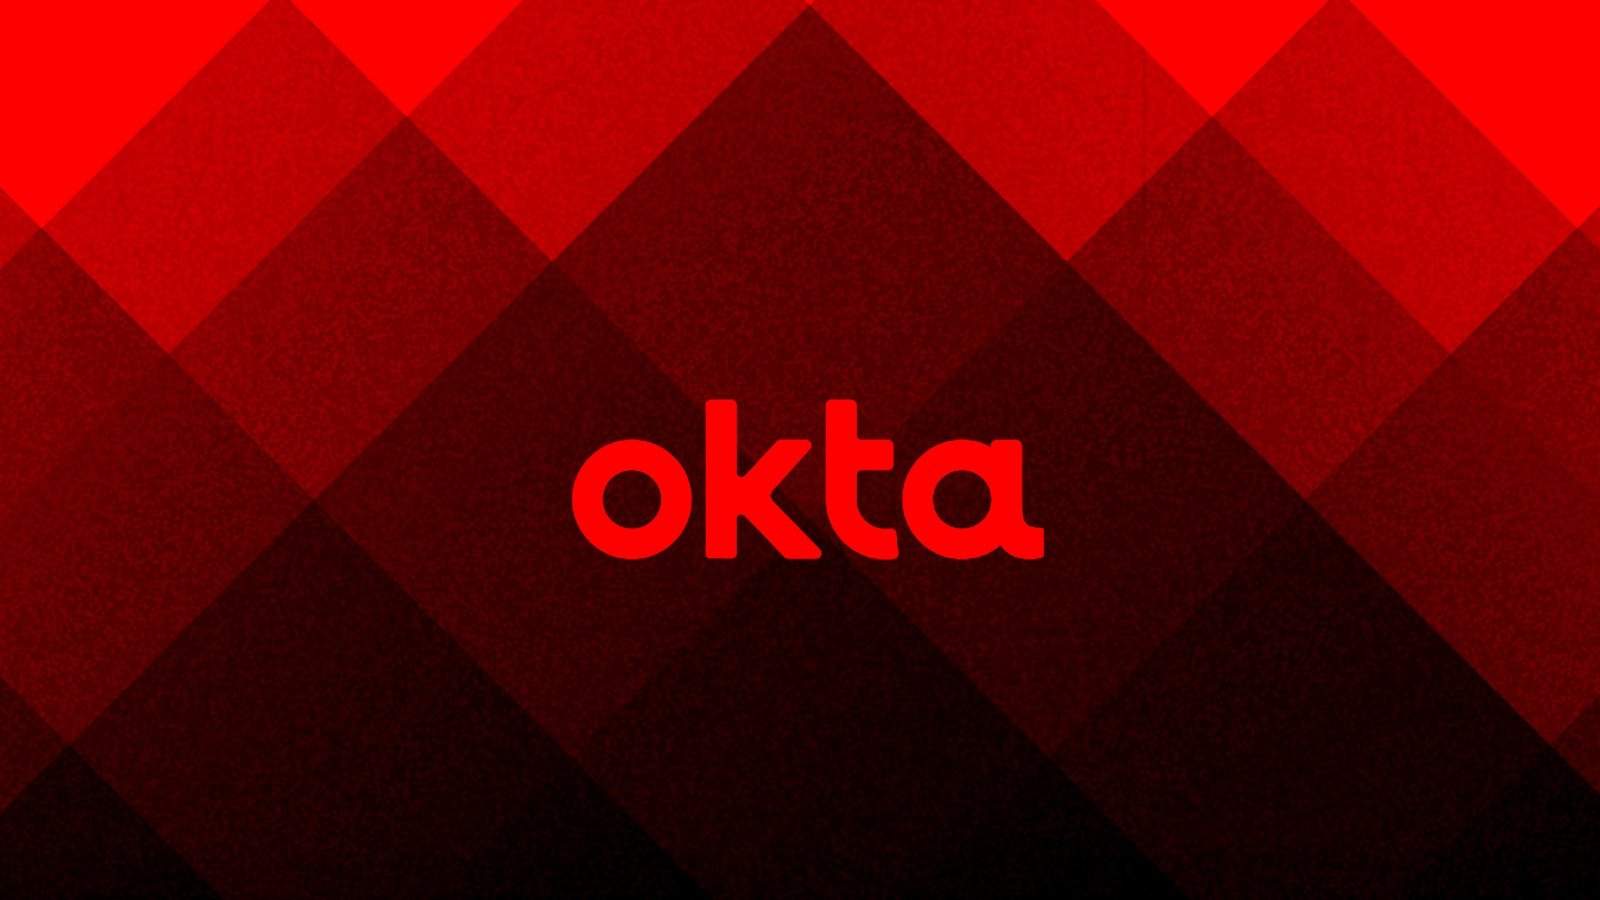 Okta: October data breach affects all customer support system users